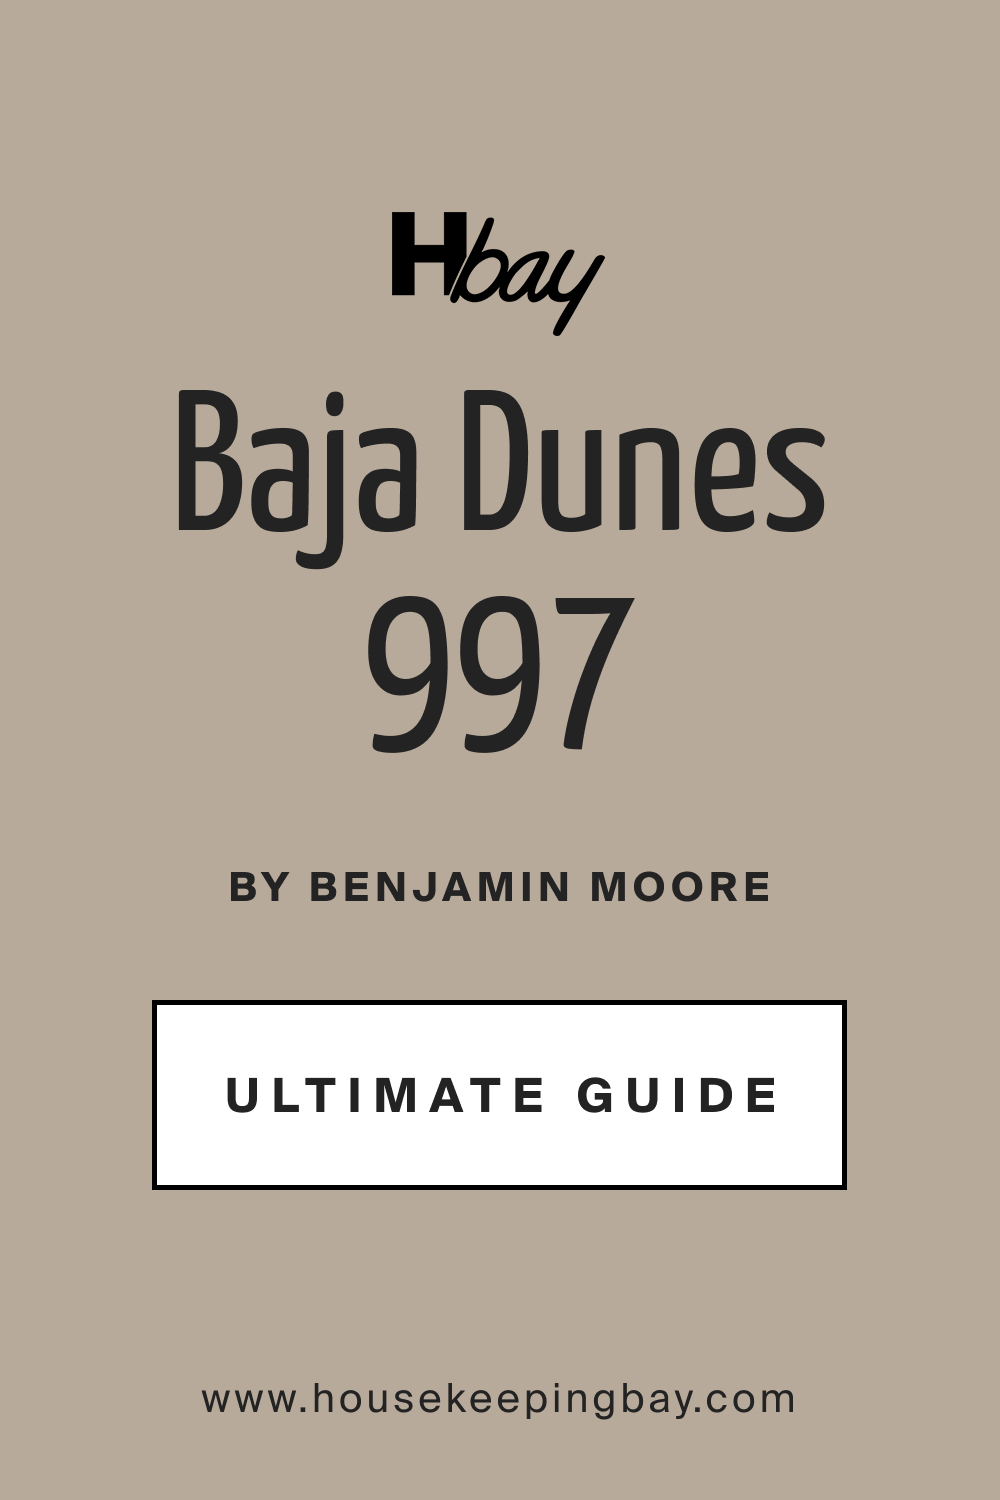 BM Baja Dunes 997 Paint Color by Benjamin Moore Ultimate Guide